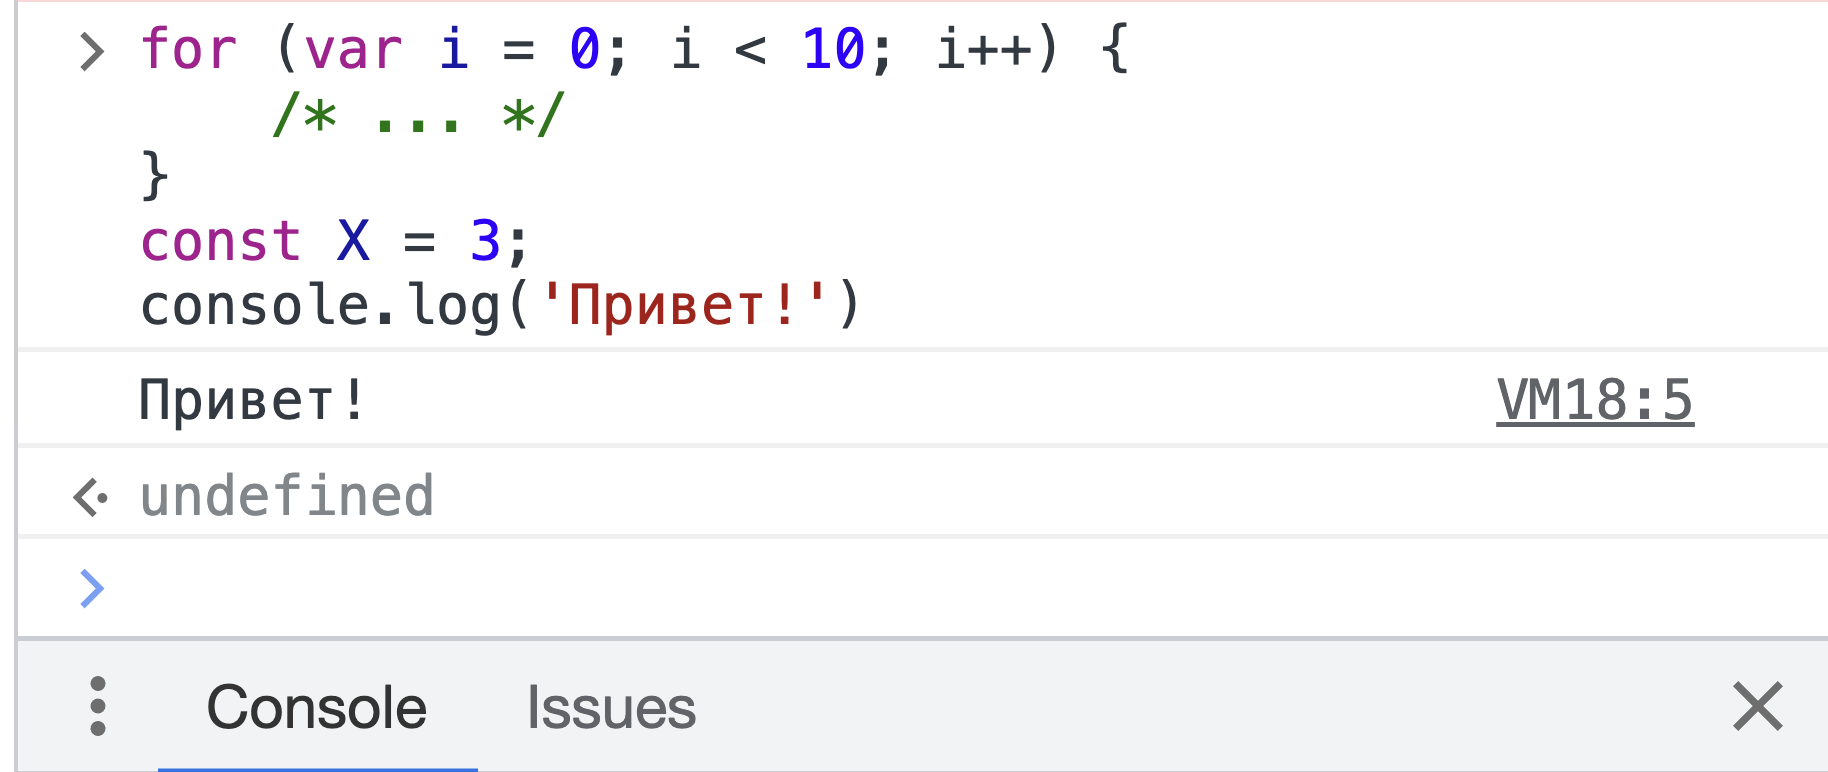 Что означает ошибка SyntaxError: Identifier has already been declared